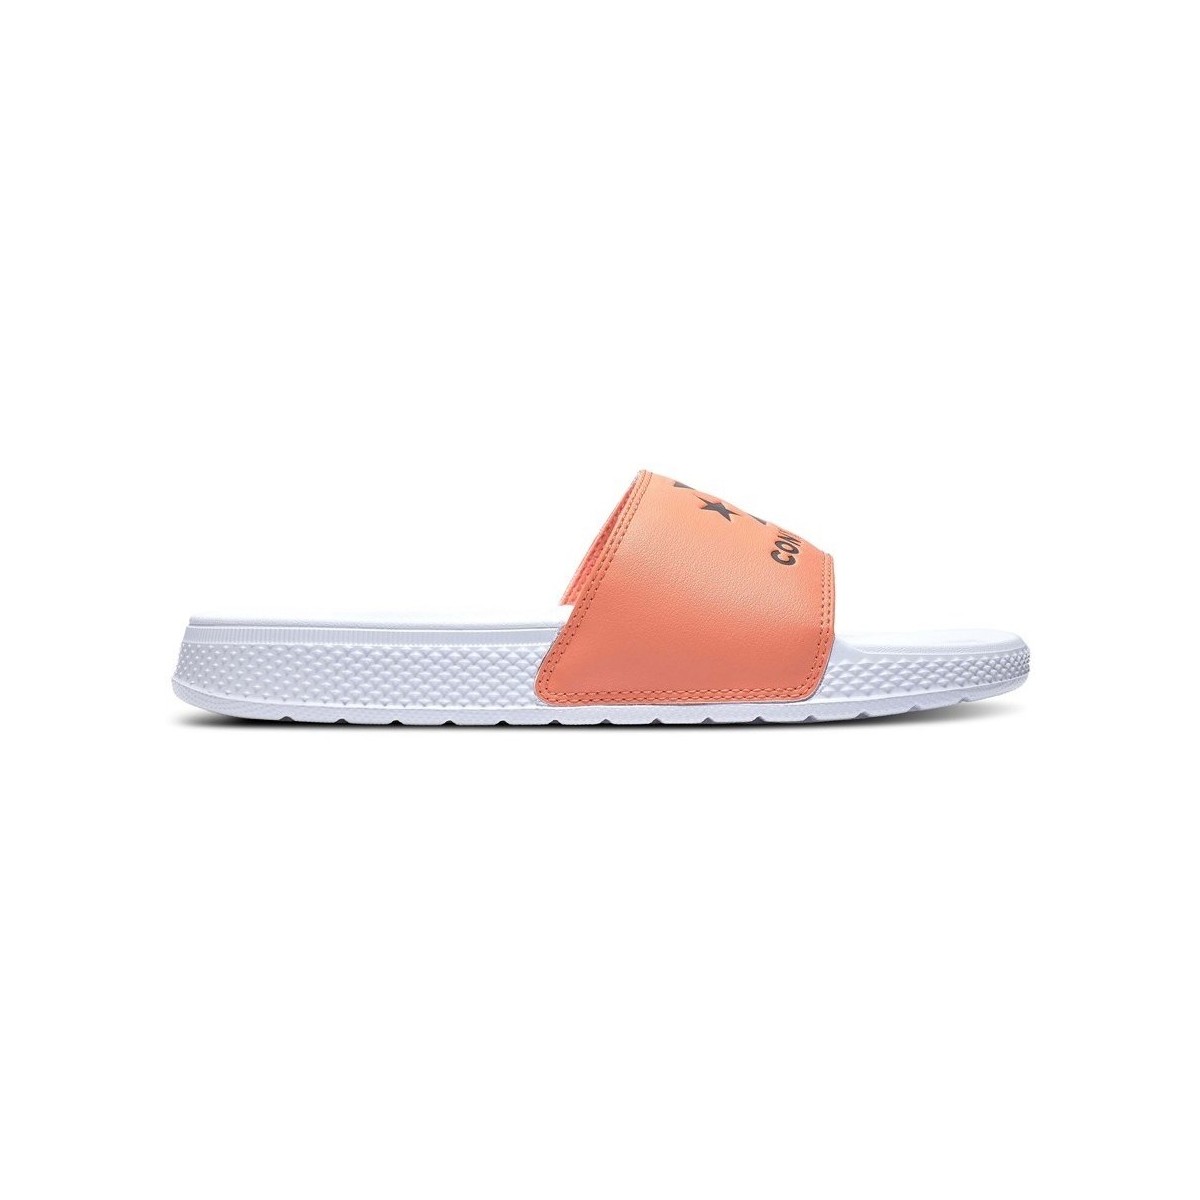 kengät Vesiurheilukengät Converse All Star Slide Seasonal Color Valkoiset, Oranssin väriset